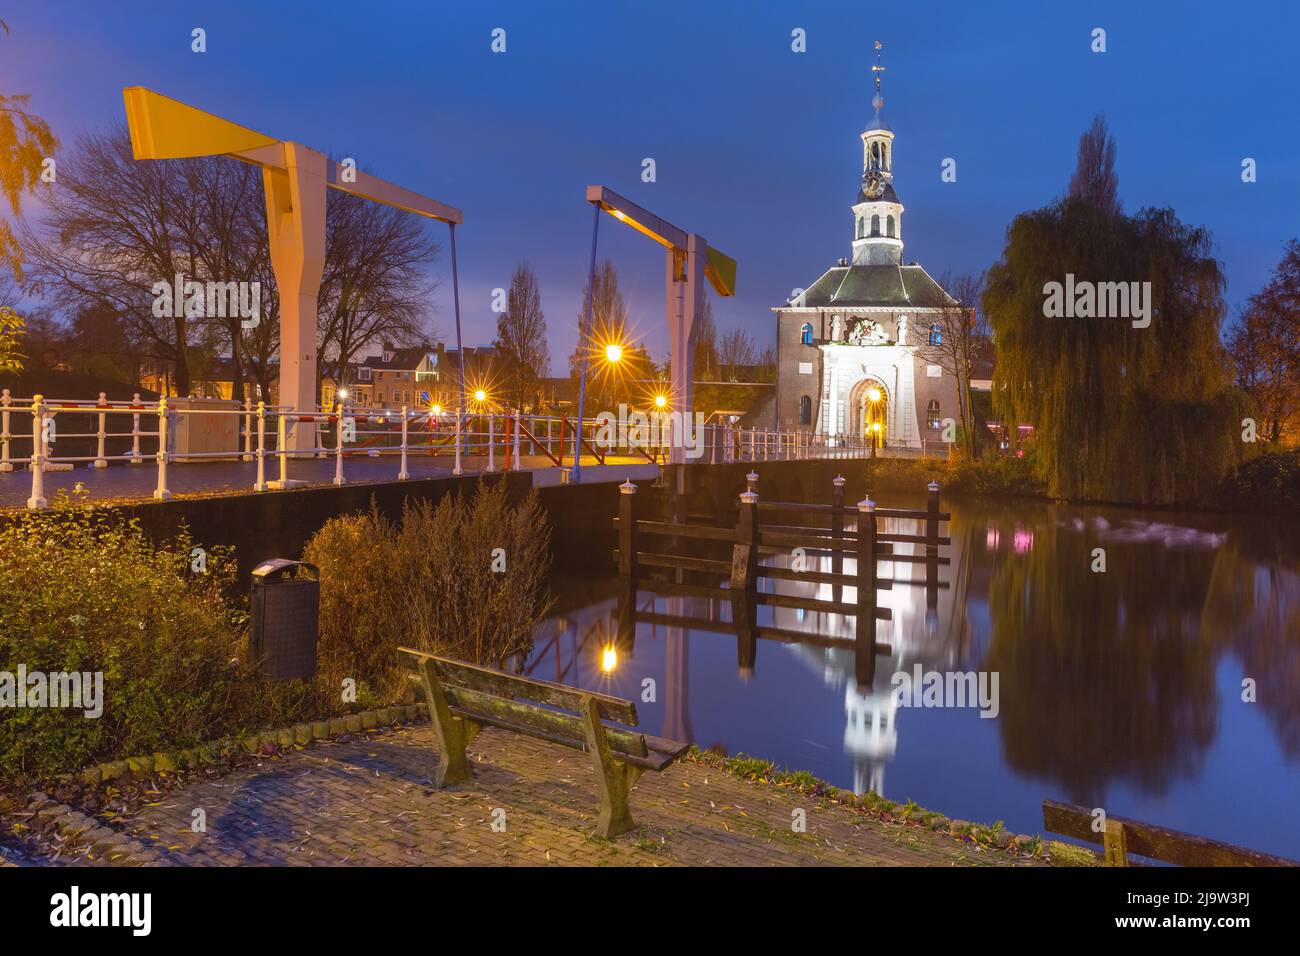 Porta notturna della città Zijlpoort e ponte Zijlpoortsbrug a Leiden, Olanda del Sud, Paesi Bassi Foto Stock